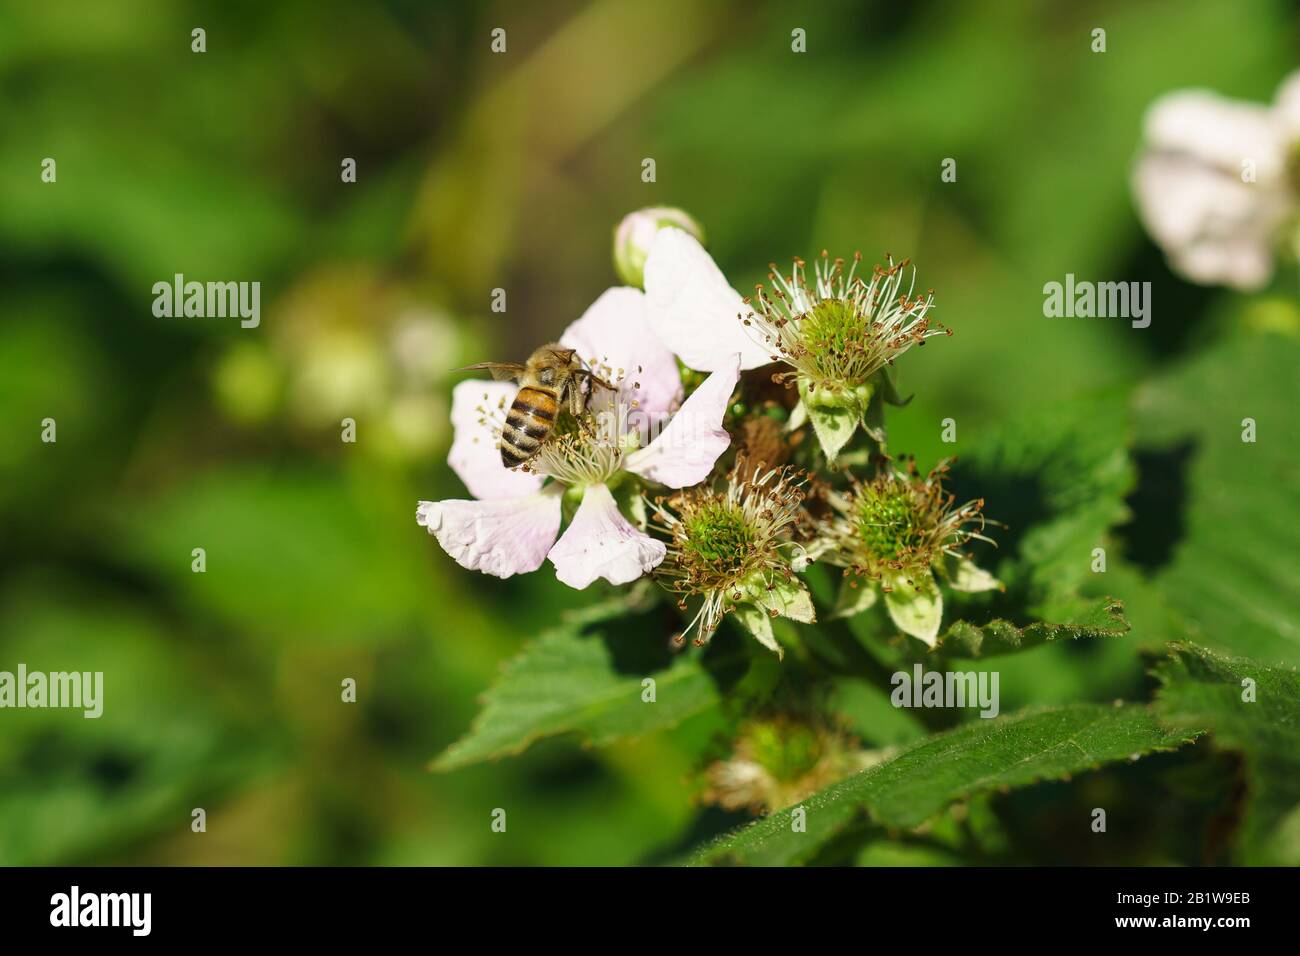 Bee on the flowers of blackberries (lat. Rubus). Macro Stock Photo